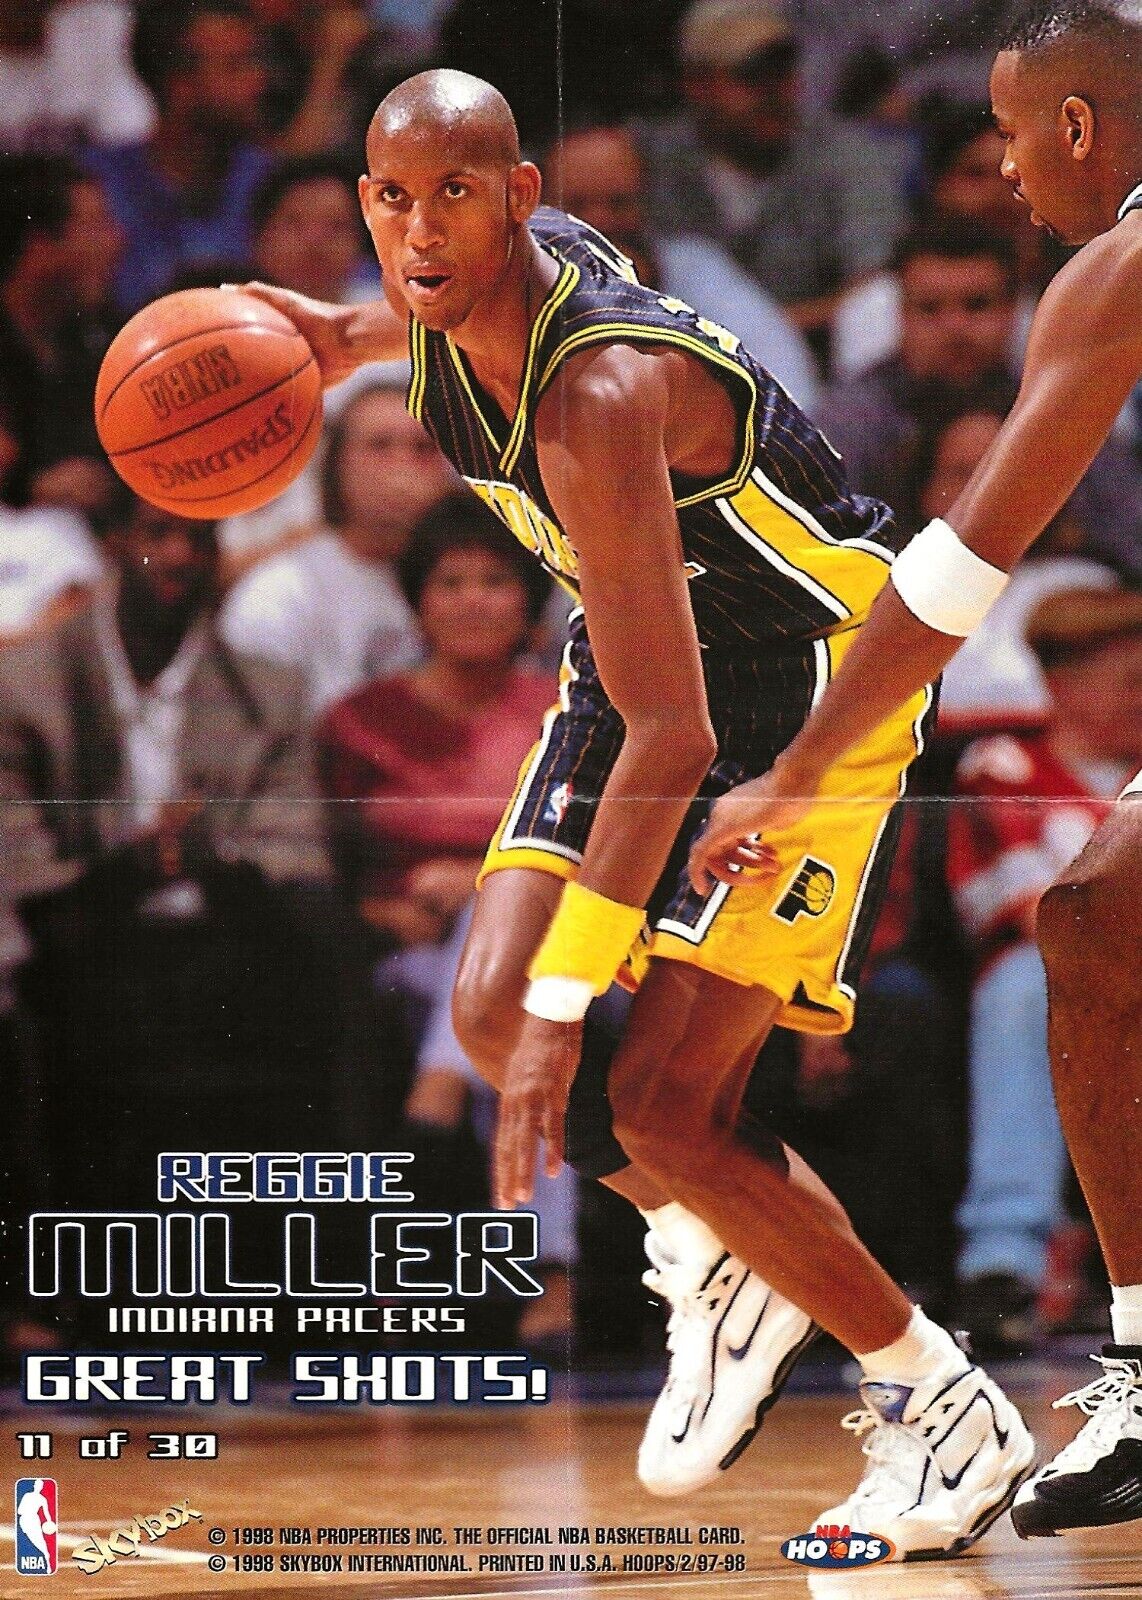 REGGIE MILLER - 1997-98 Hoops Great Shots - Mini Poster - #11/30 - Pacers